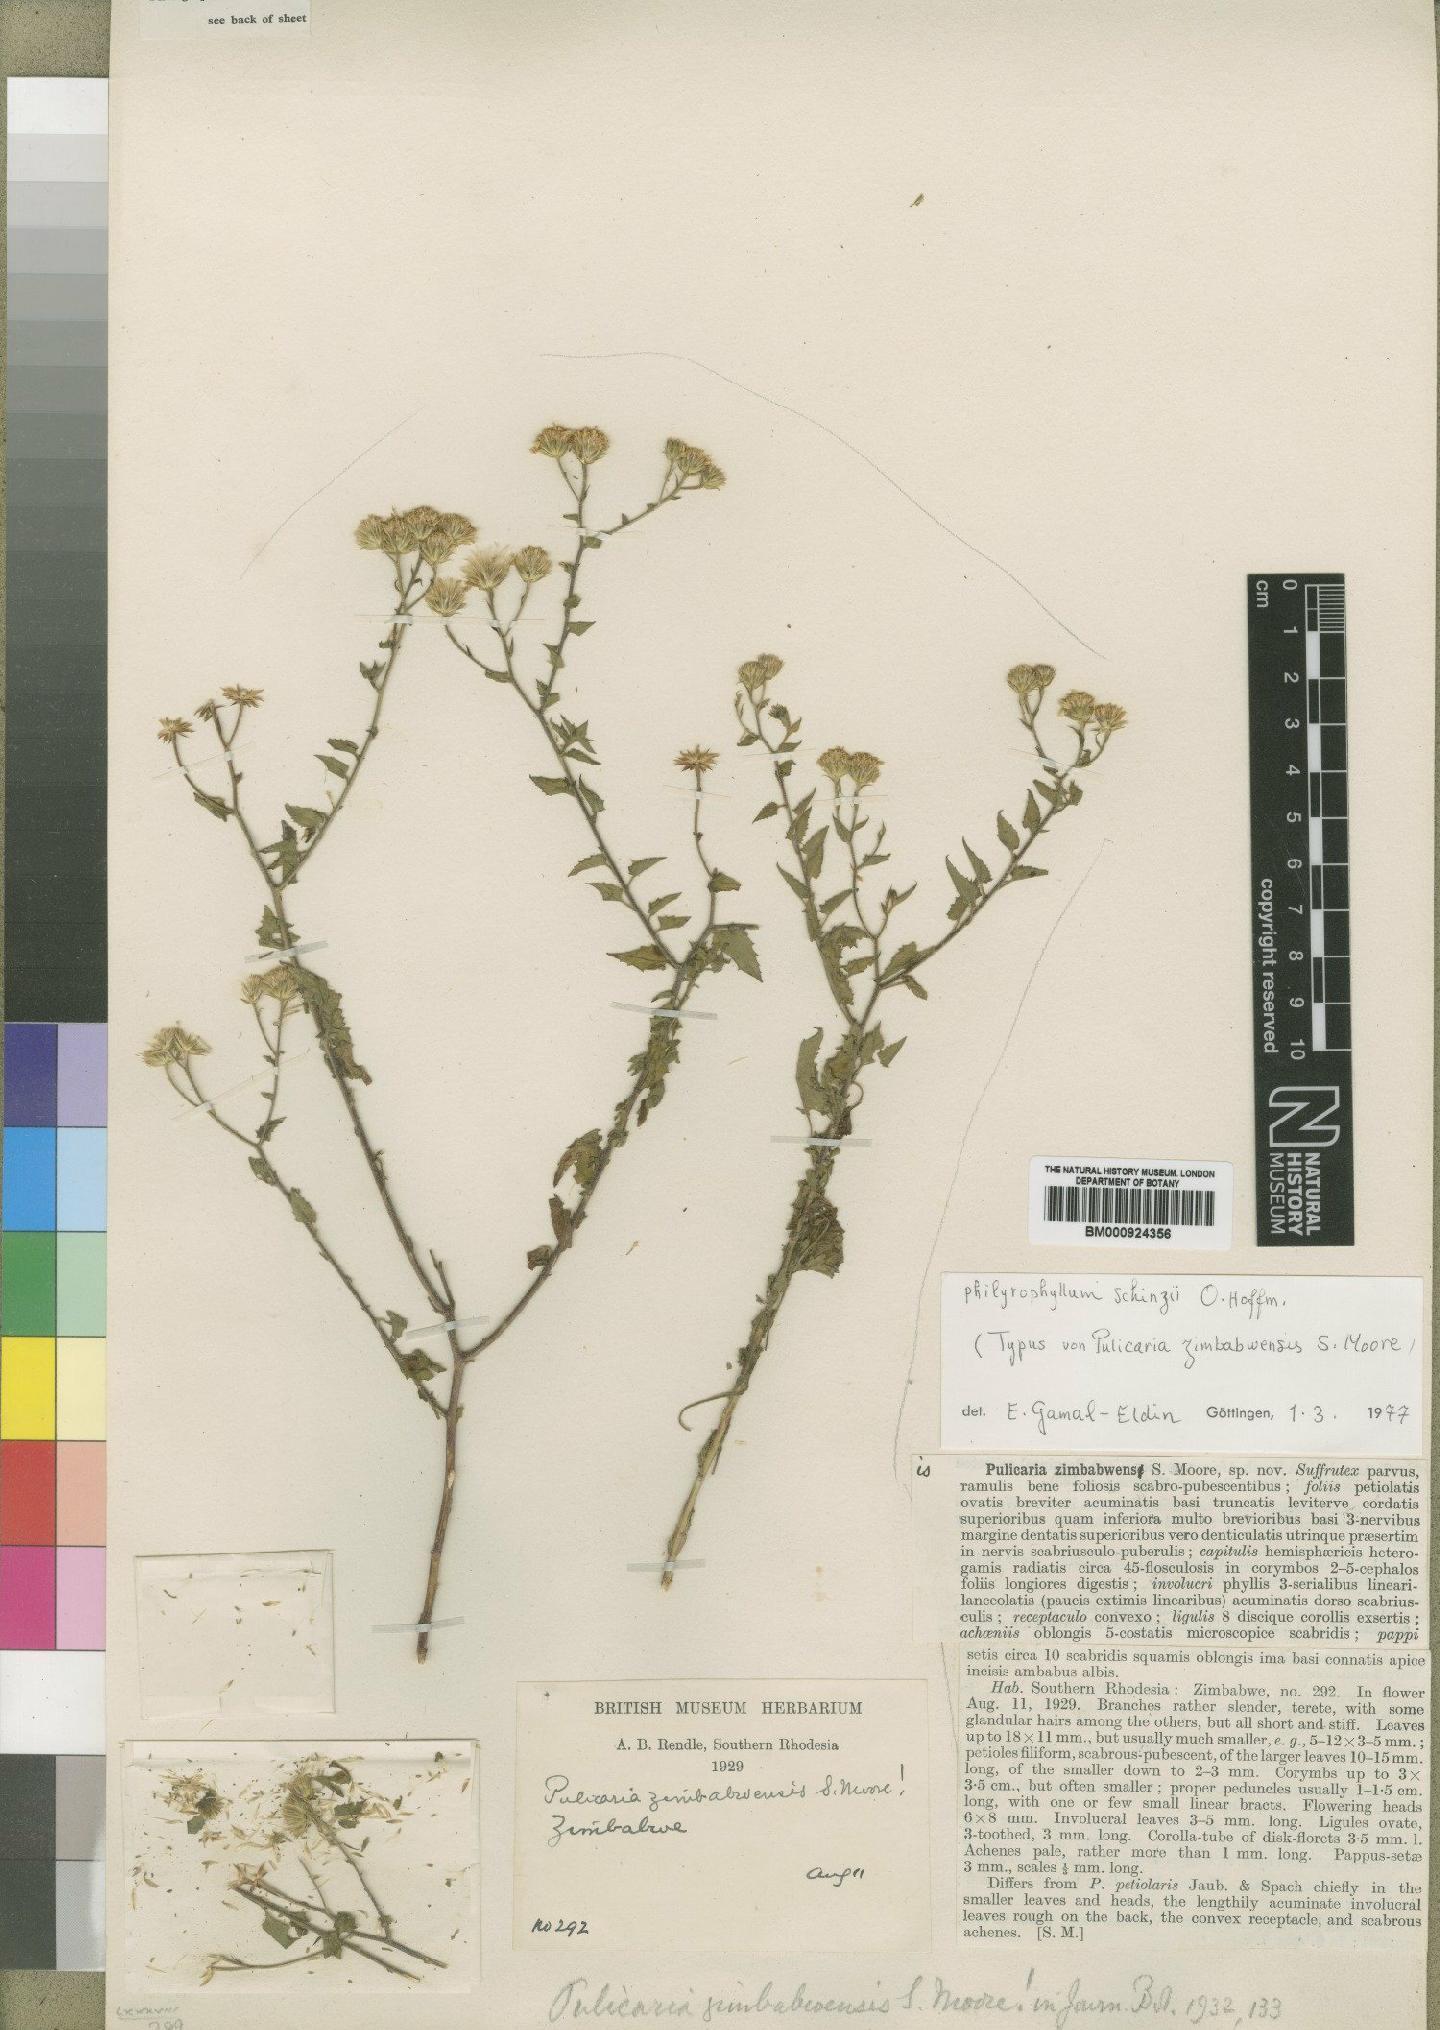 To NHMUK collection (Philyrophyllum schinzii O.Hoffm.; Type; NHMUK:ecatalogue:4529384)